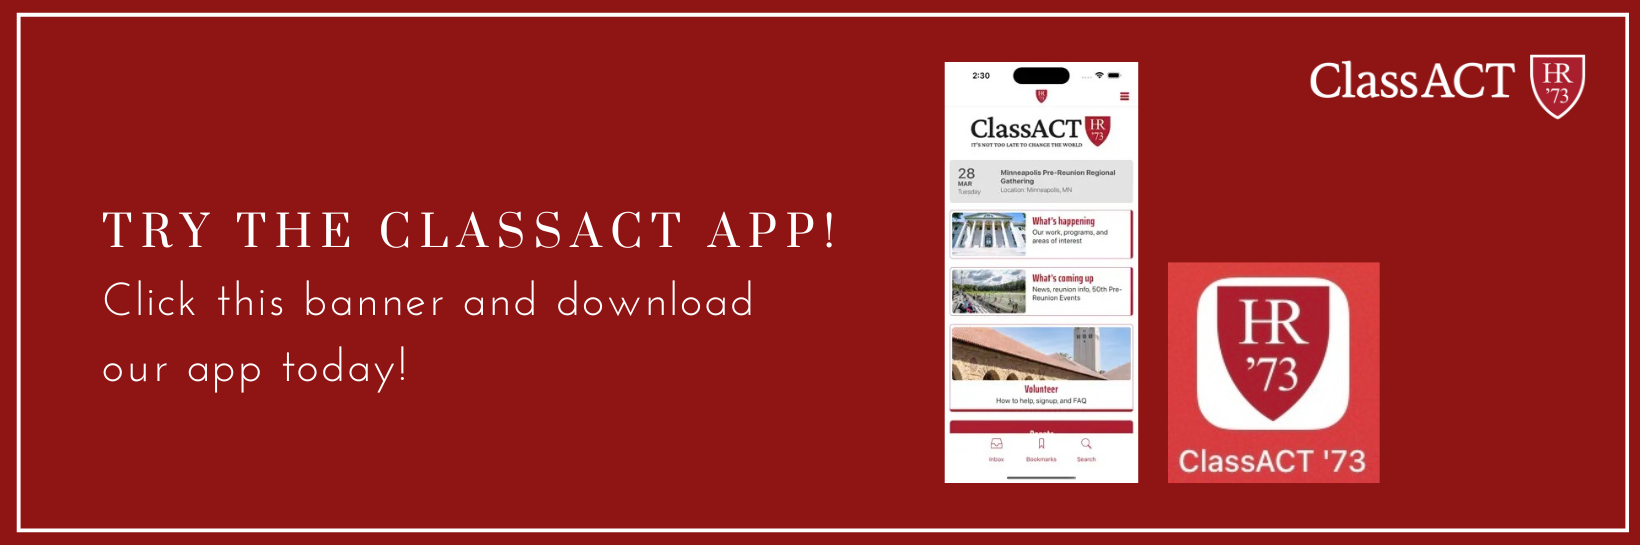 ClassACT Has A New App